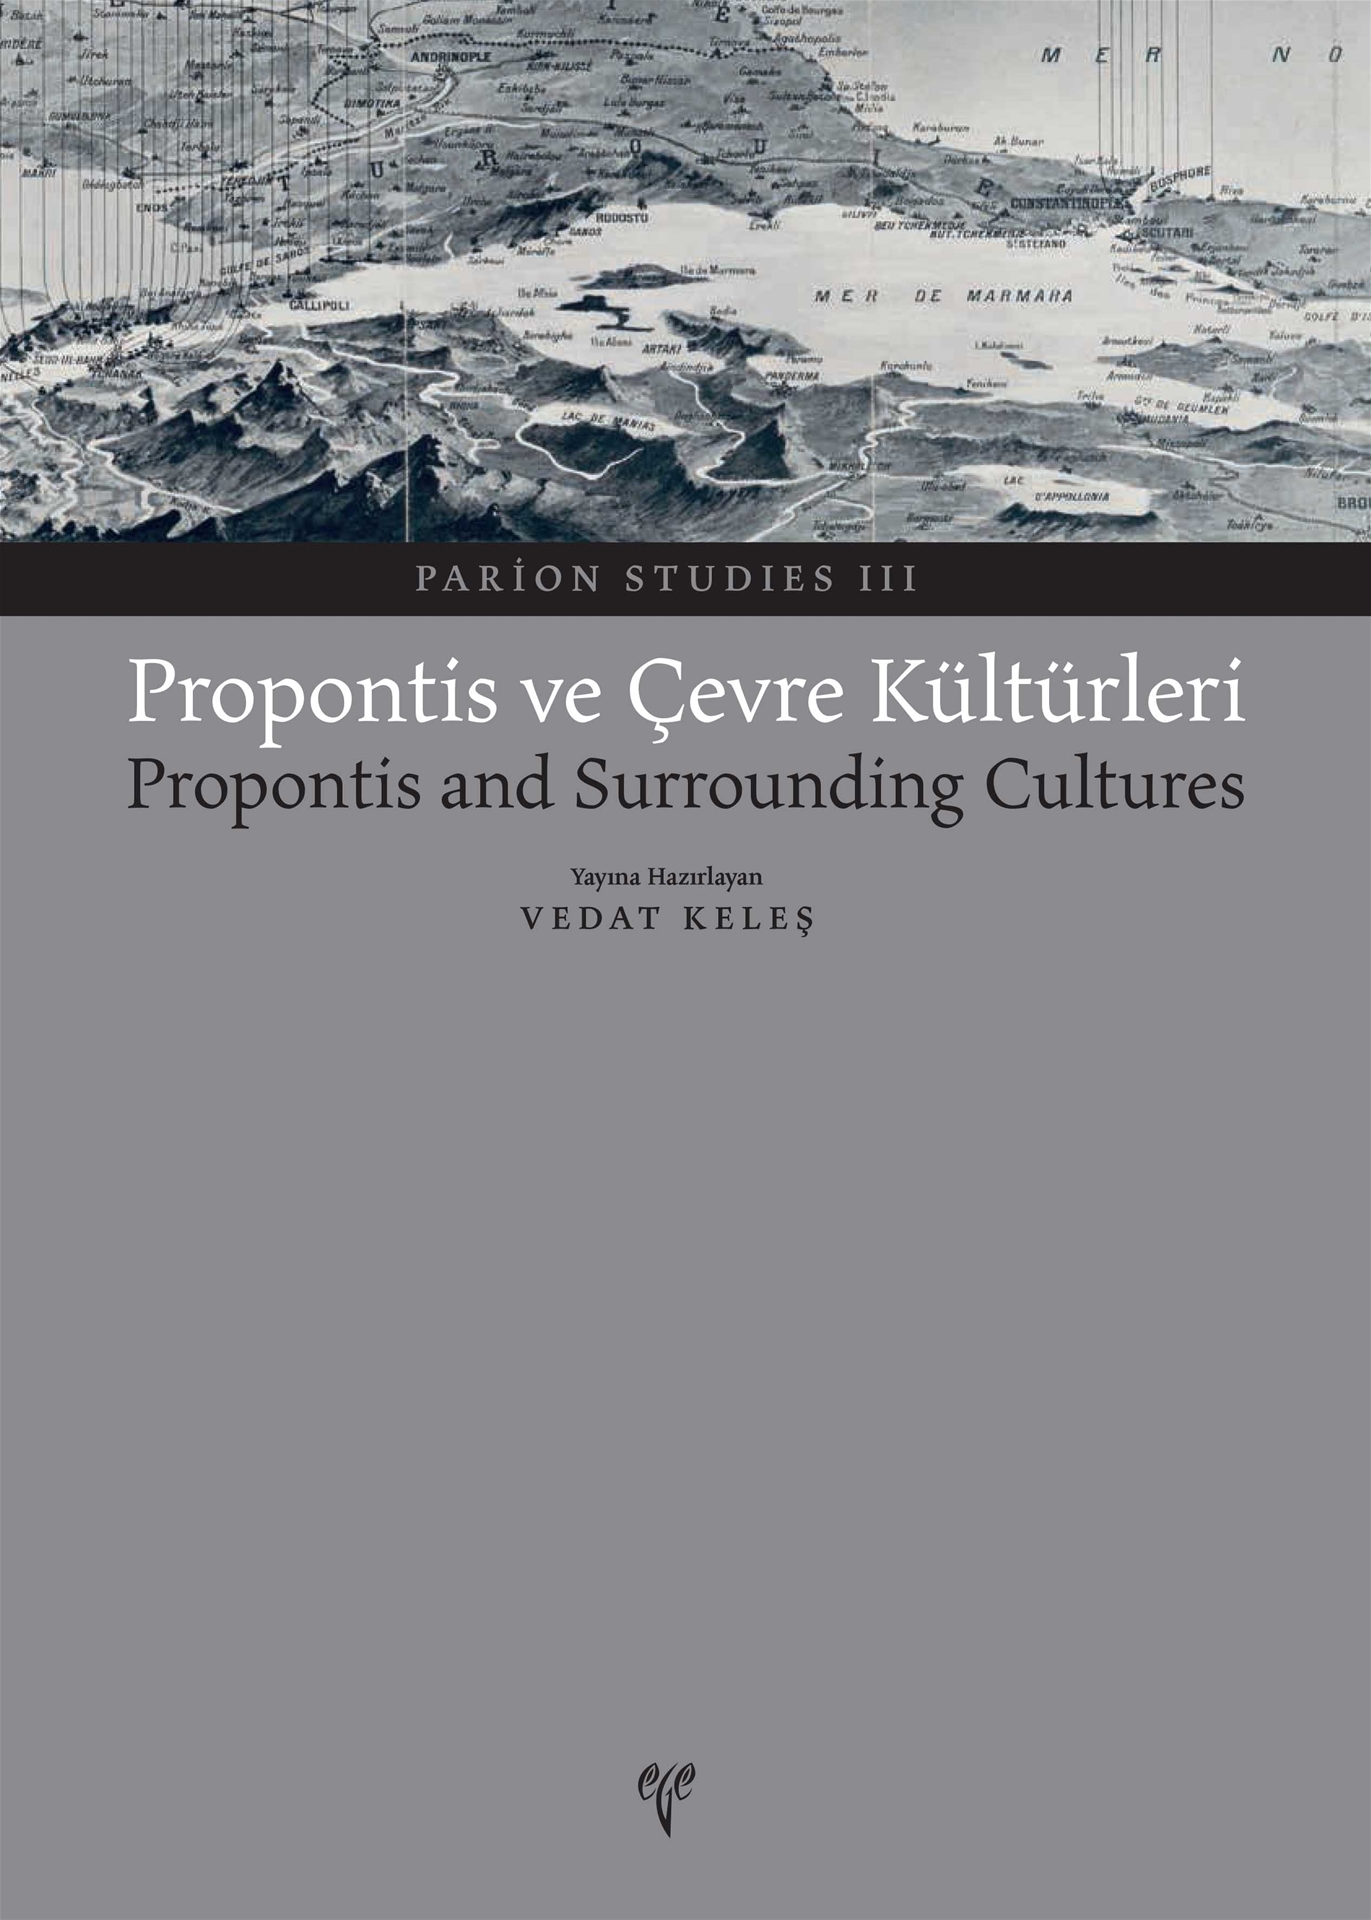 Keleş, Vedat : Propontis and Surrounding Cultures